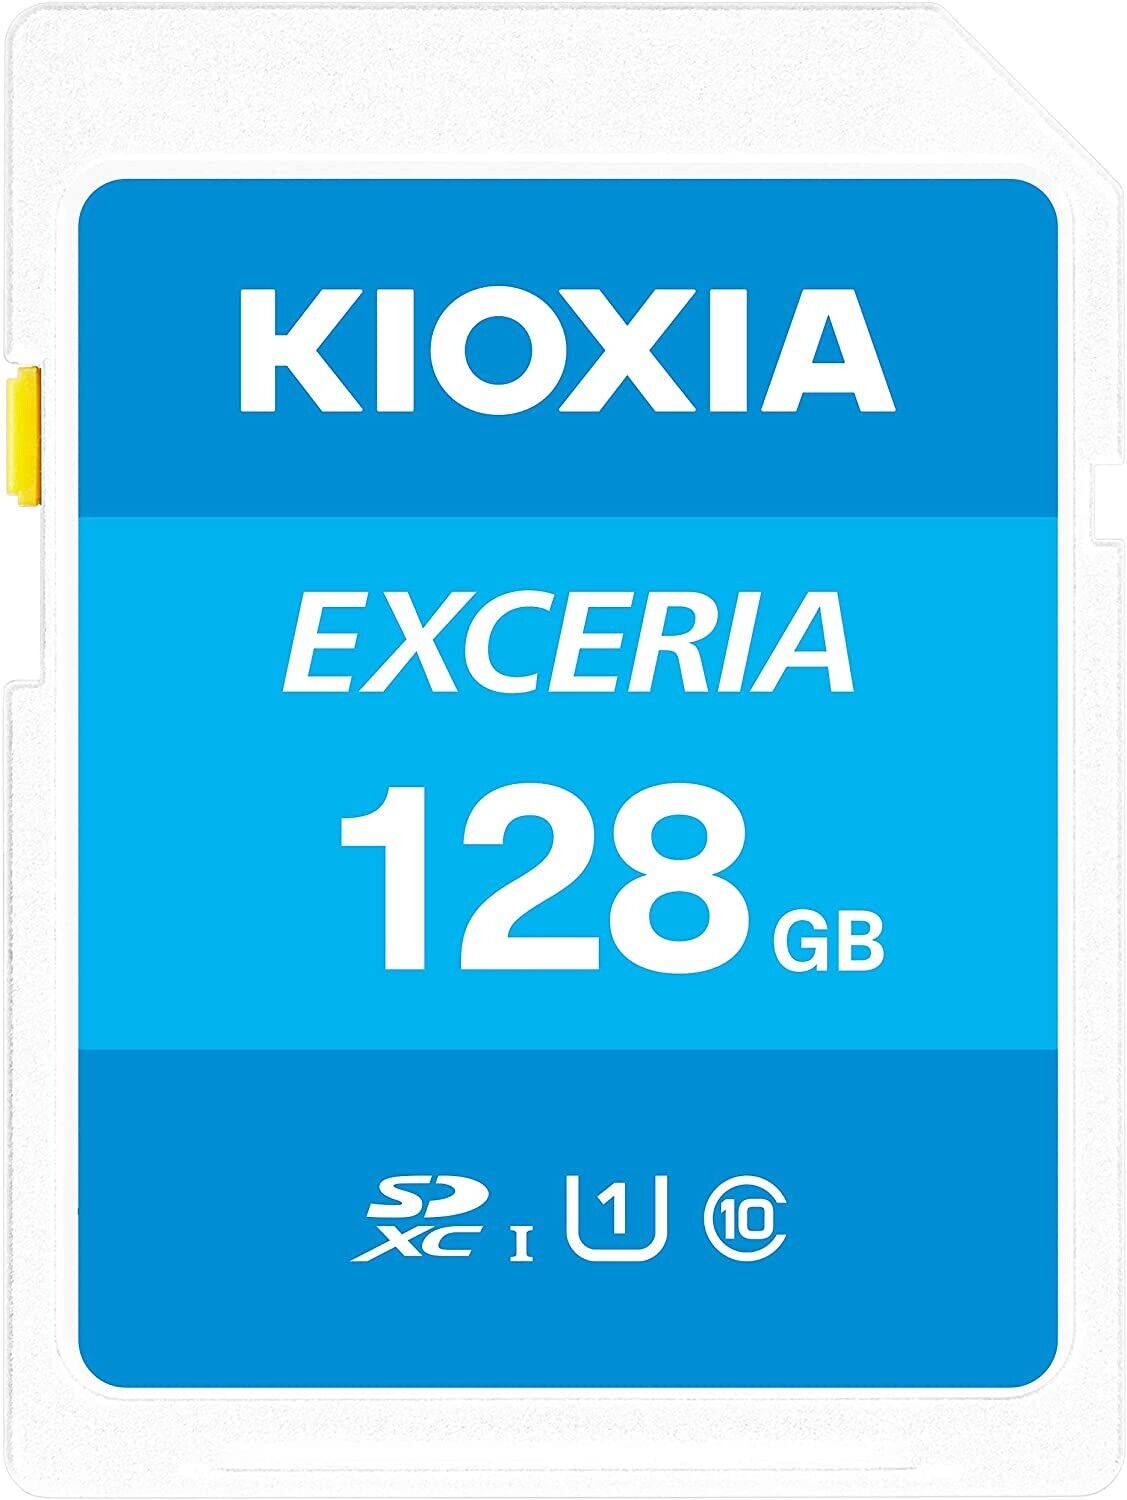 Kioxia SD-Card Exceria 128GB